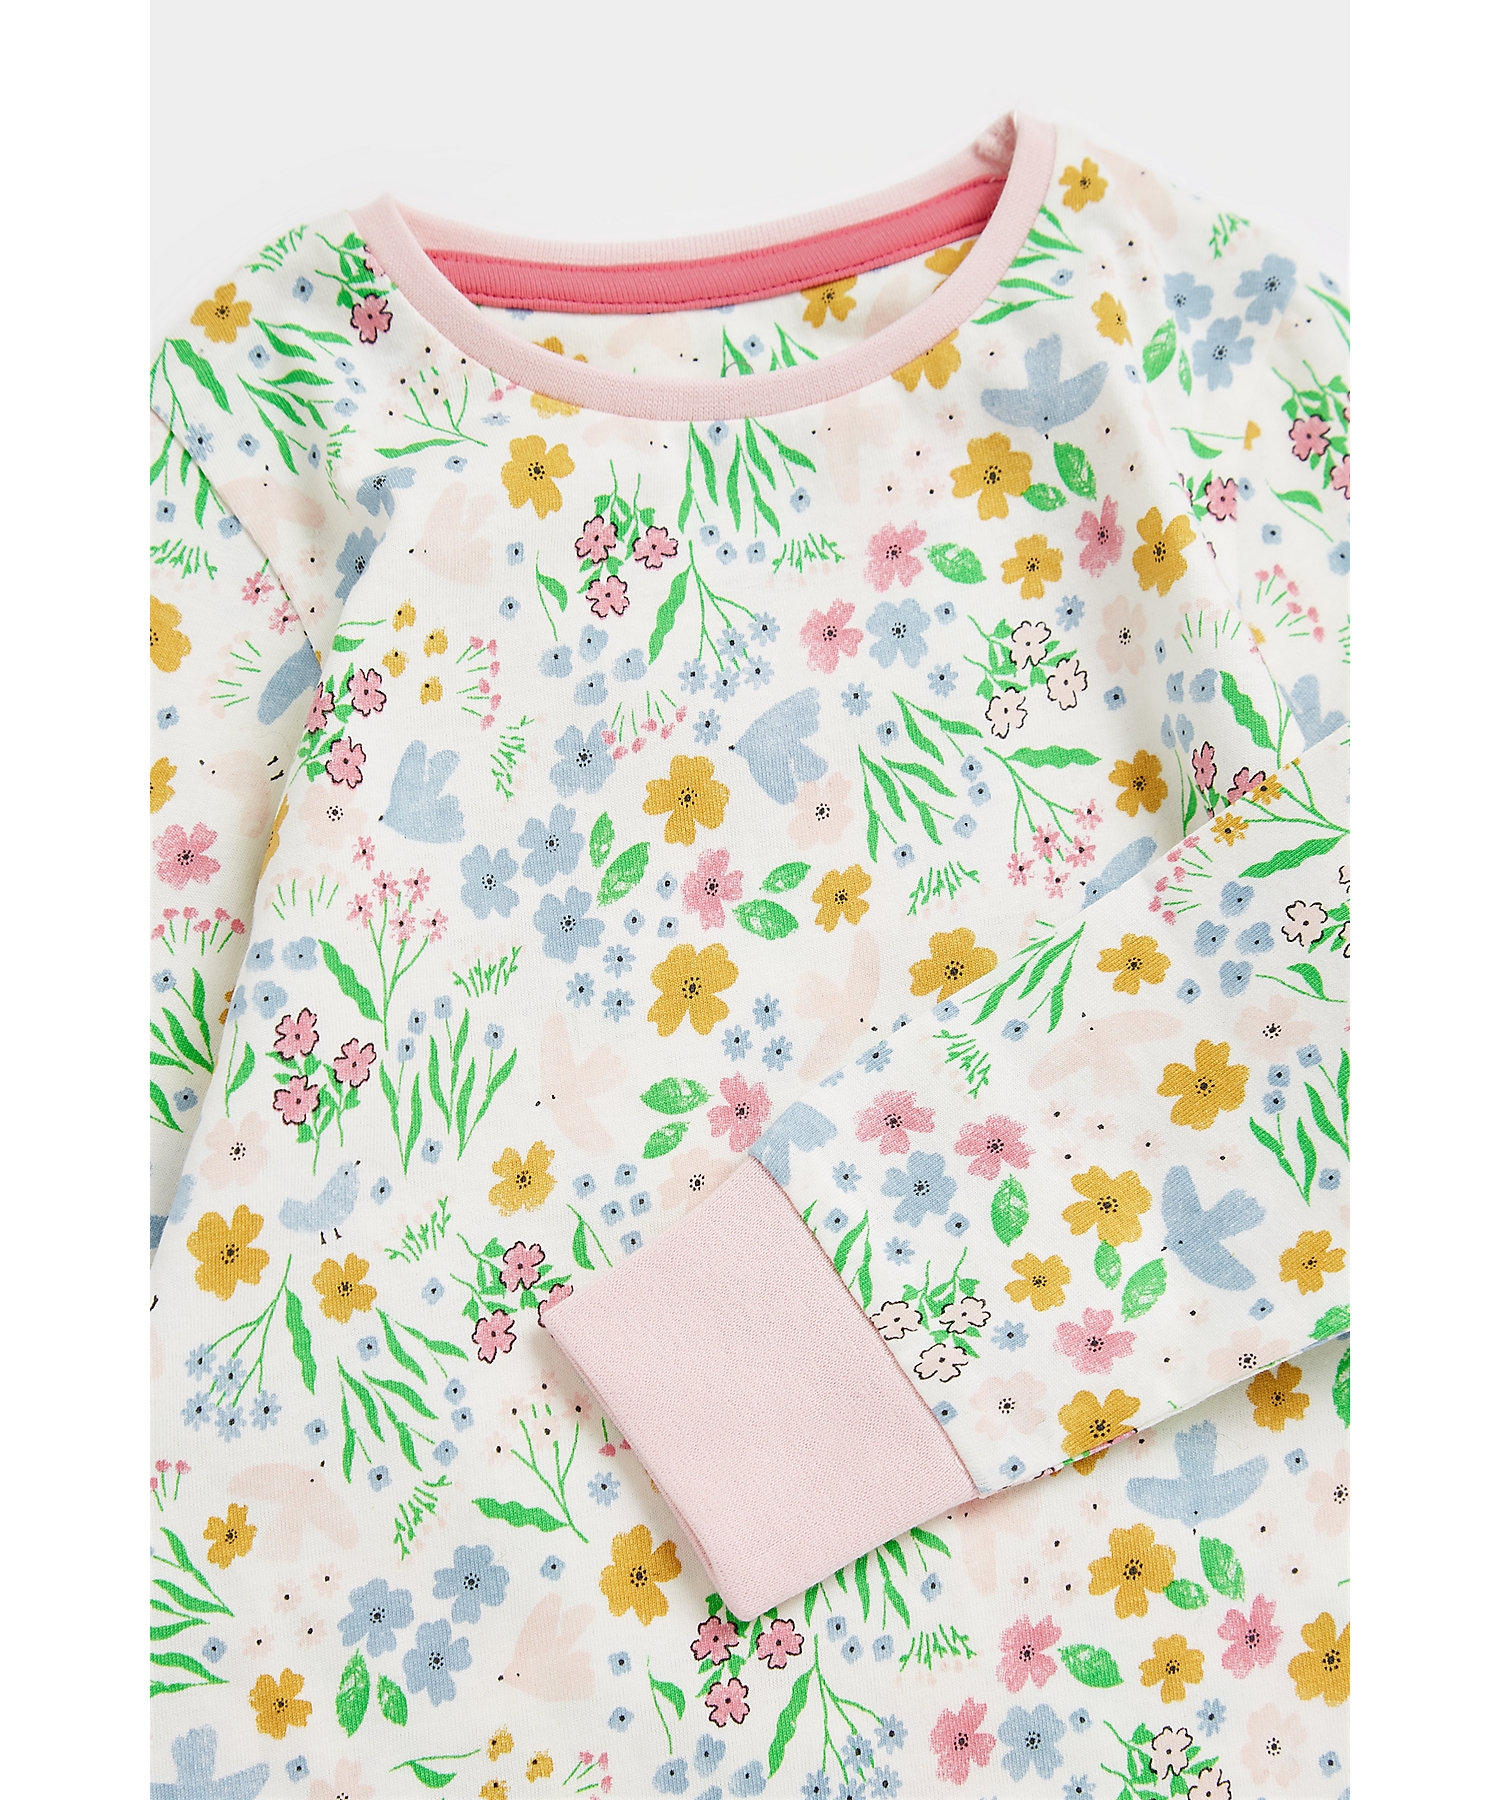 Girls Full Sleeves Pyjama Set Floral All Over Print-Multicolor